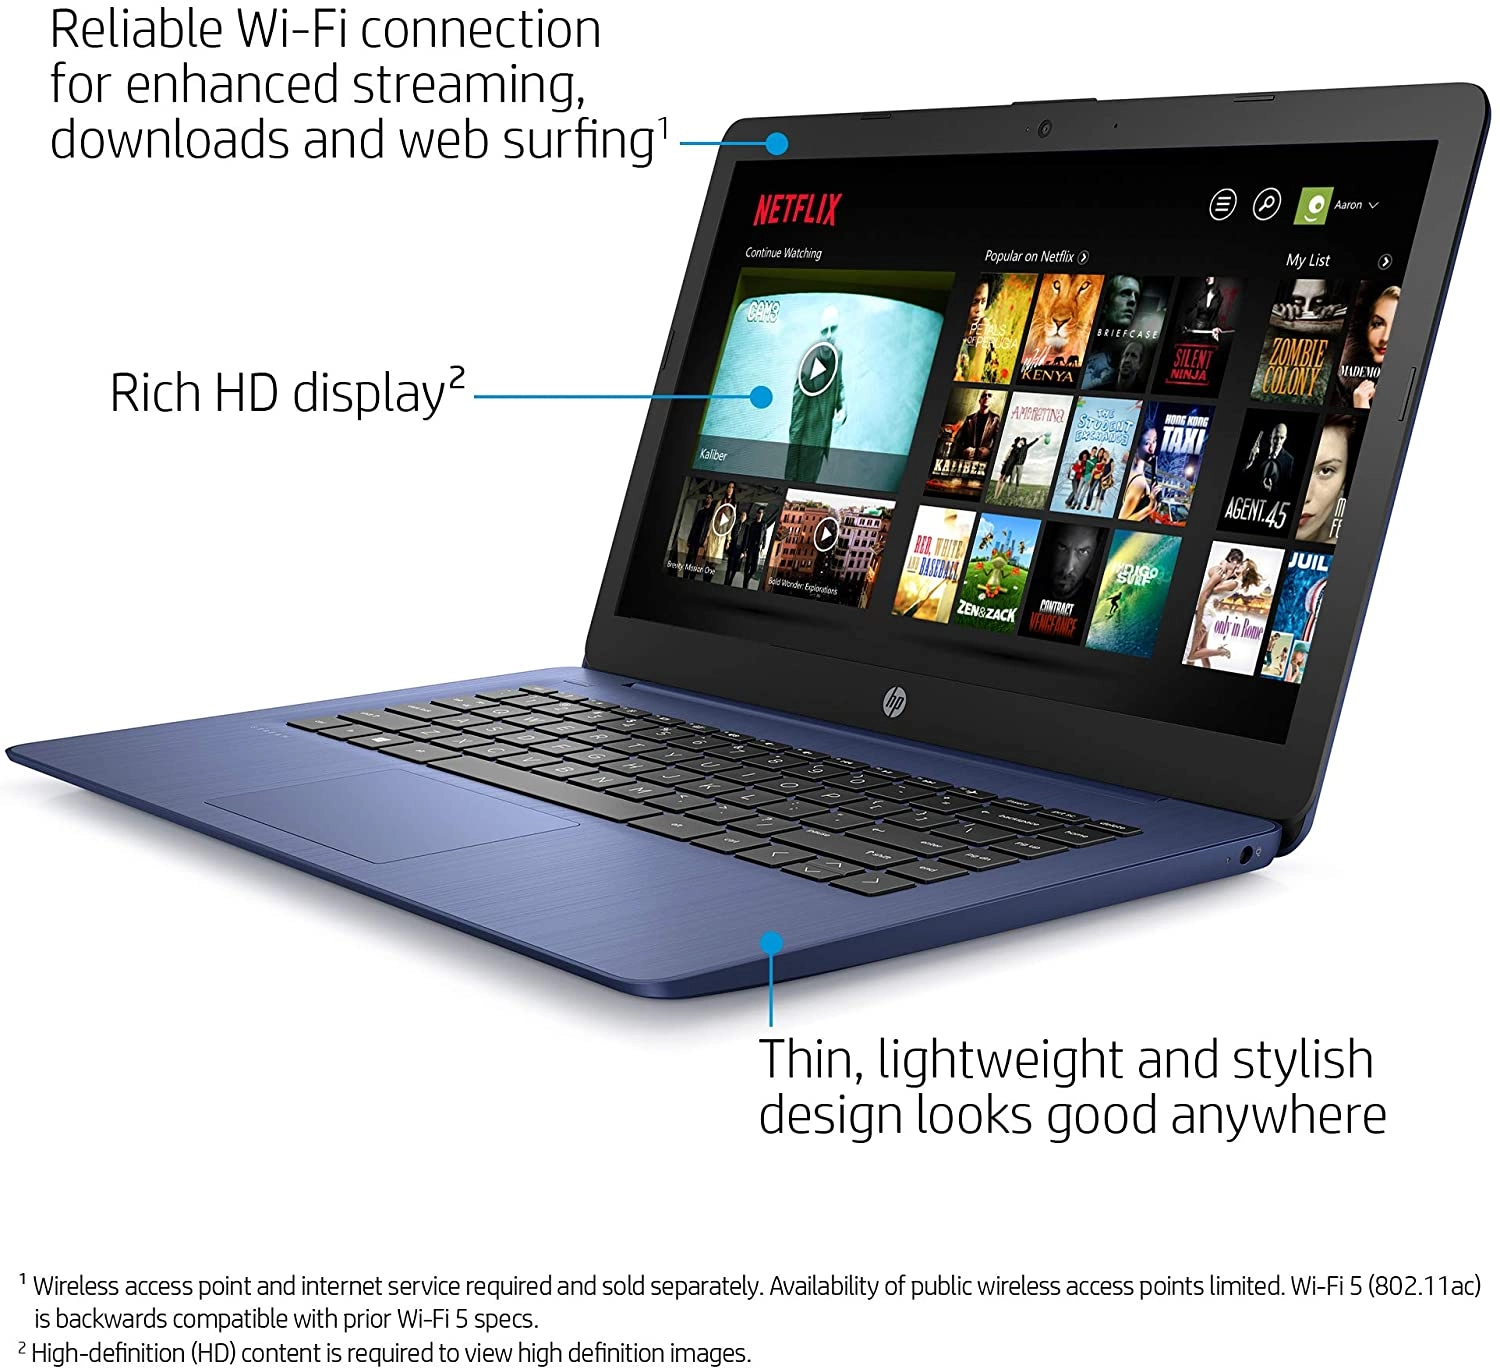 HP Stream Laptop laptop image